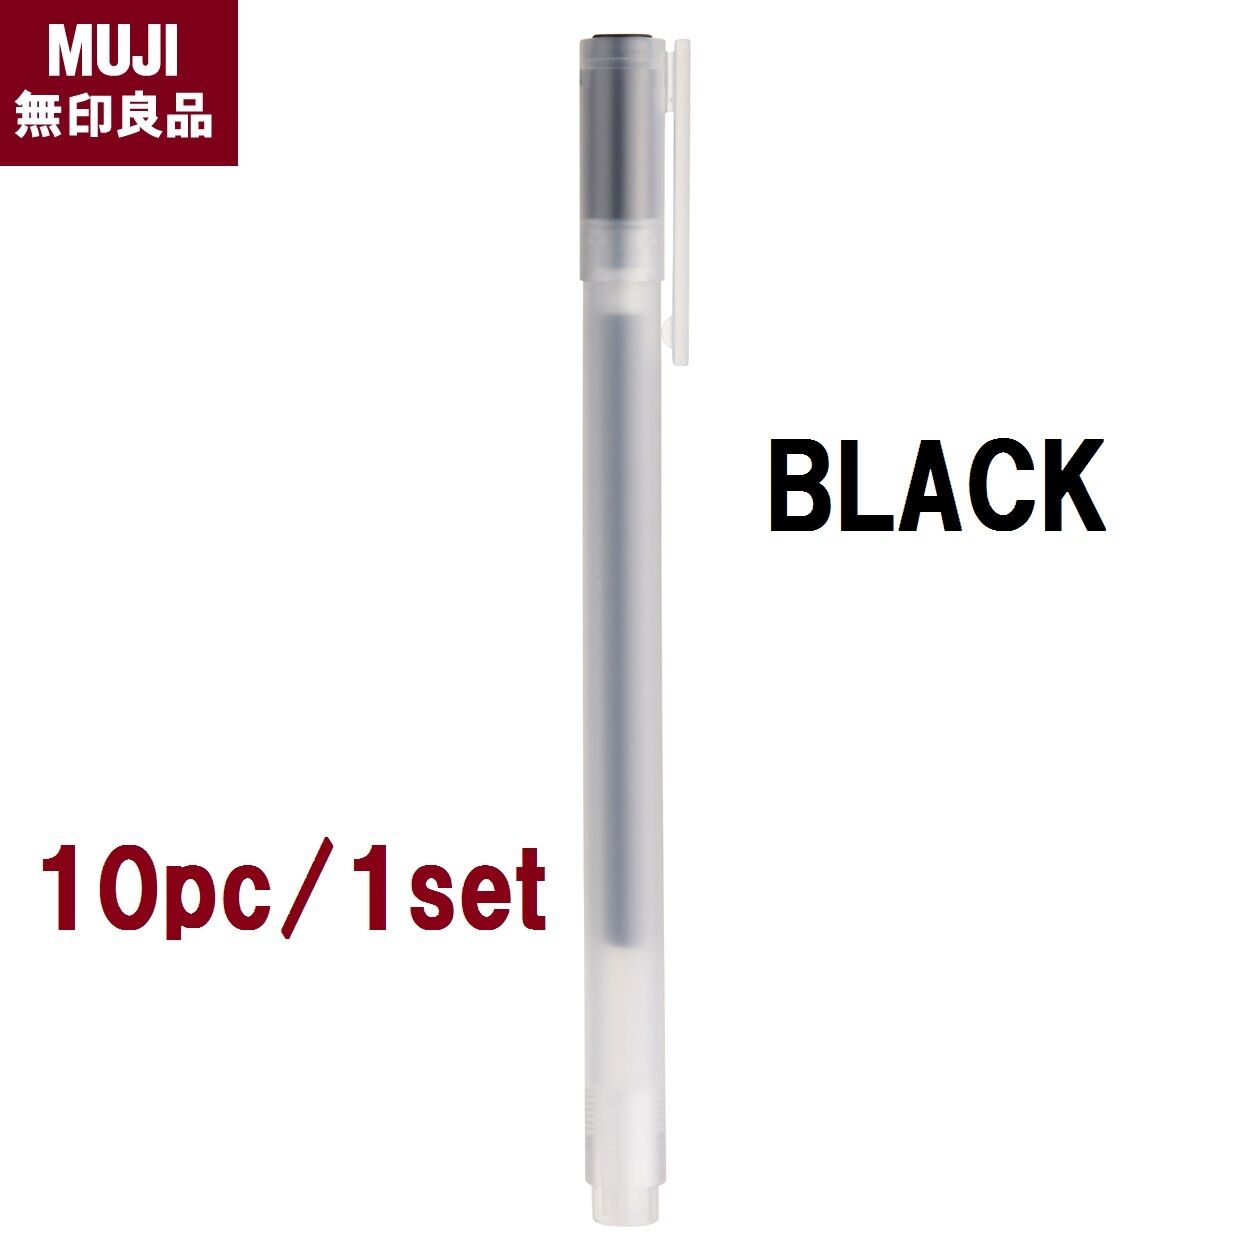 NEW MUJI Gel Ink Black Pen 10 set 0.38mm MoMa Stationary made in Japan 